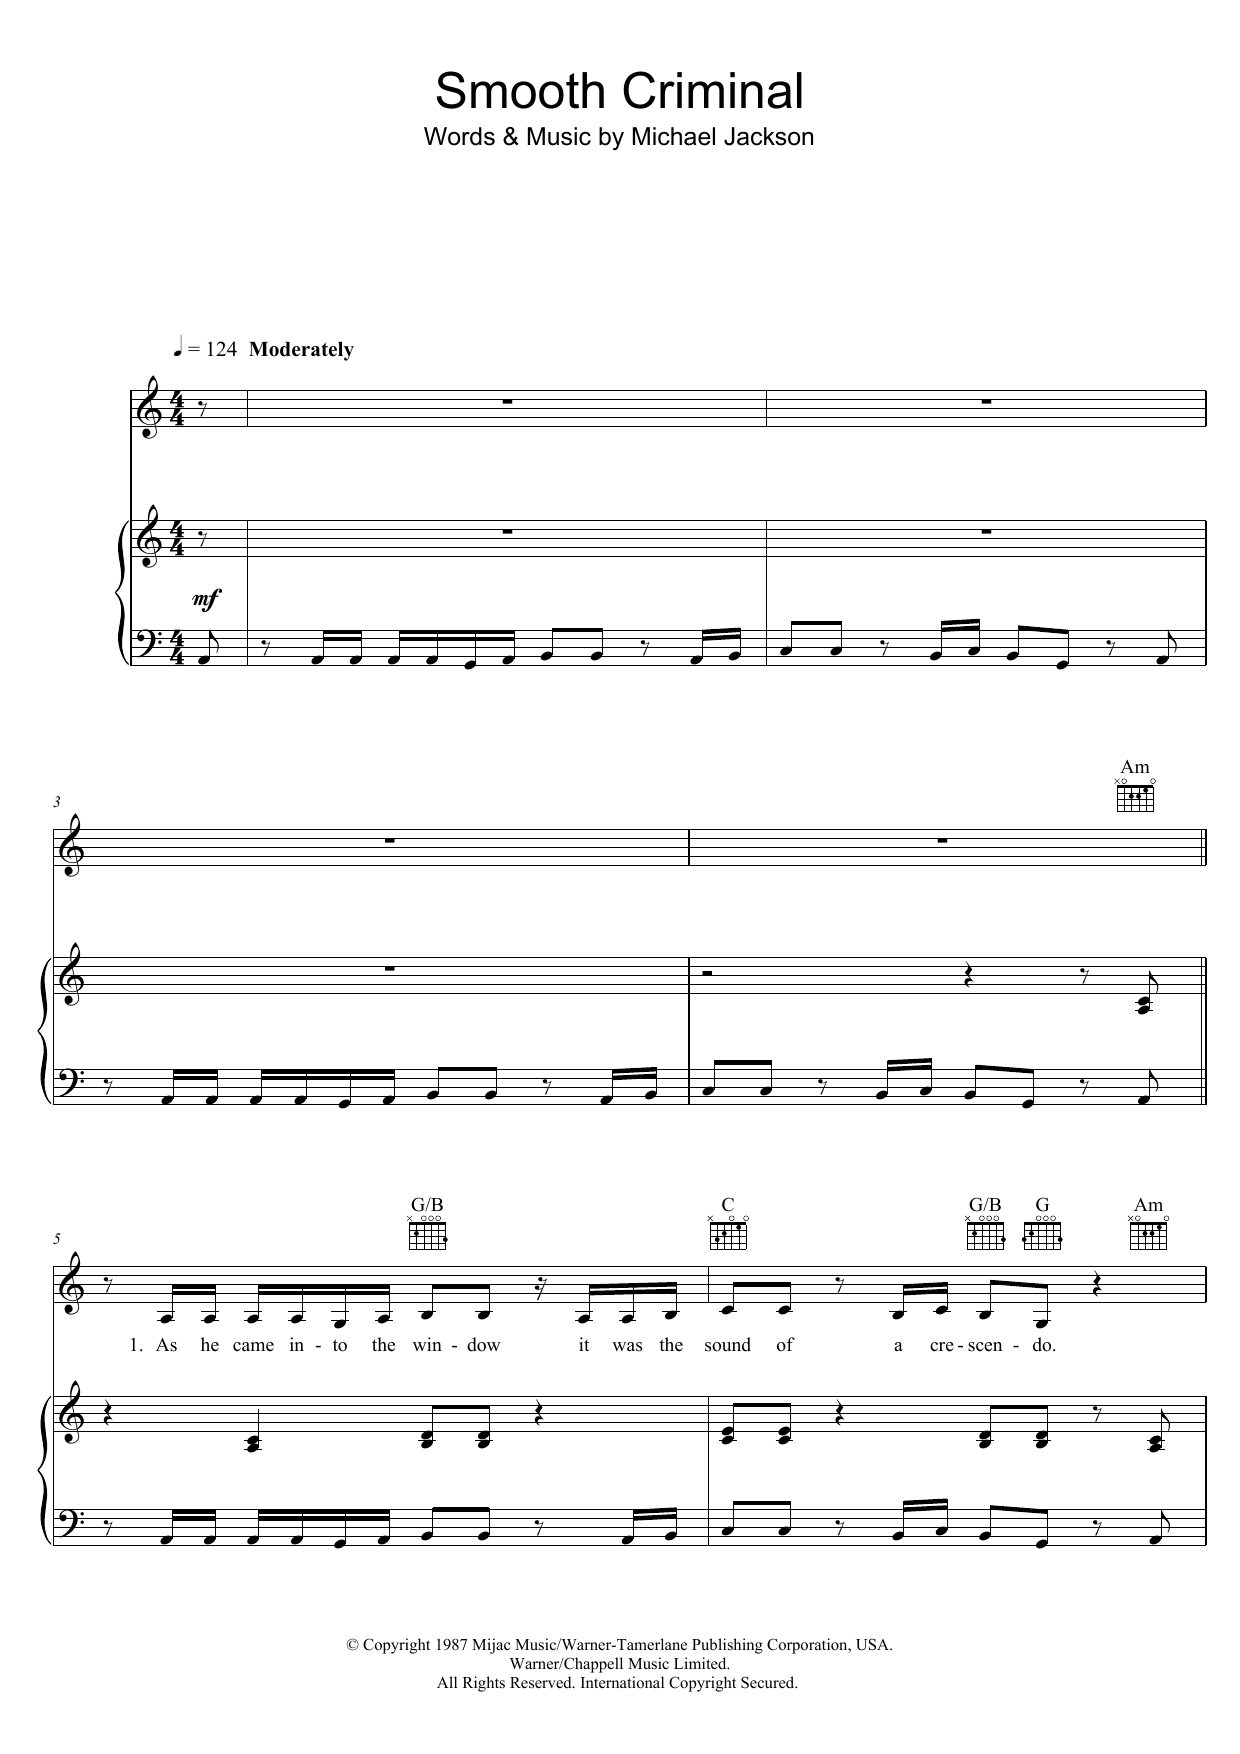 Michael Jackson Smooth Criminal Sheet Music Notes & Chords for Ukulele - Download or Print PDF